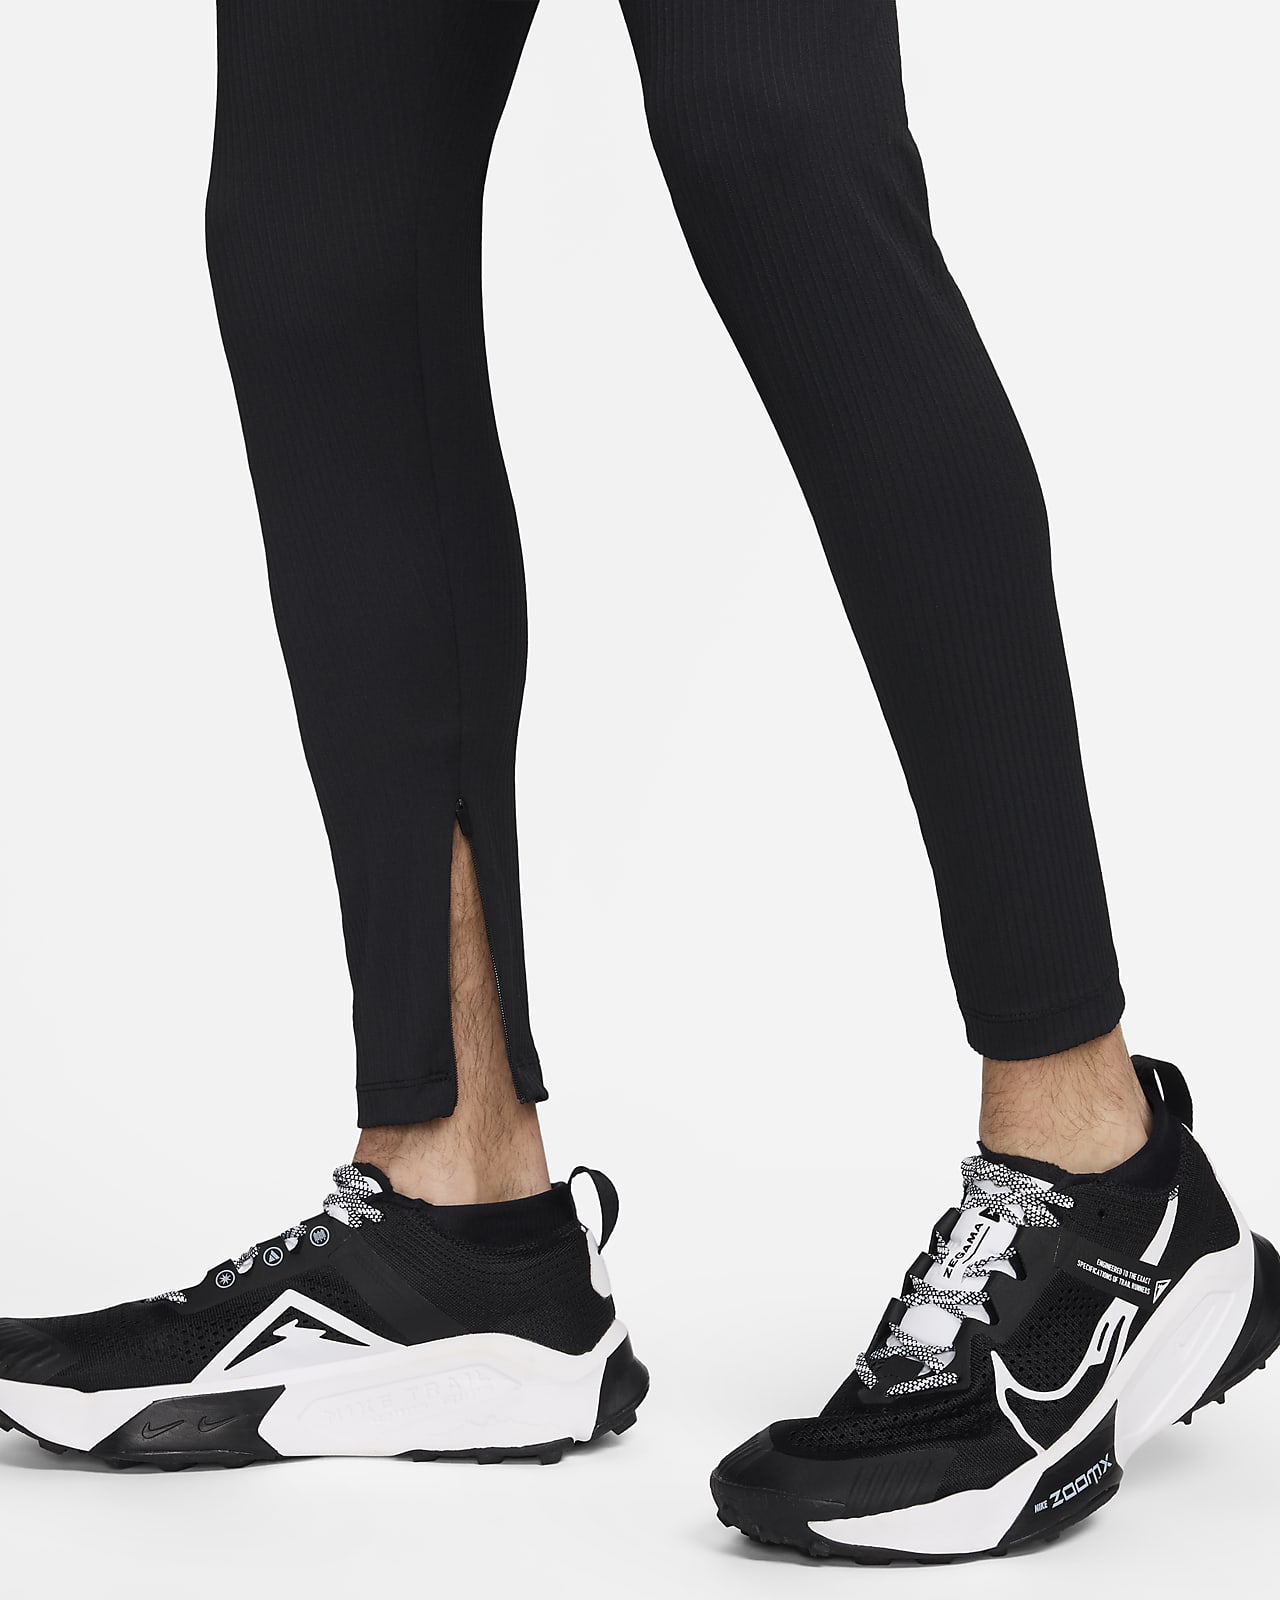 $80 NEW Mens Nike Aeroswift 1/2 Length Running Tights Shorts AR3246-474 XL  